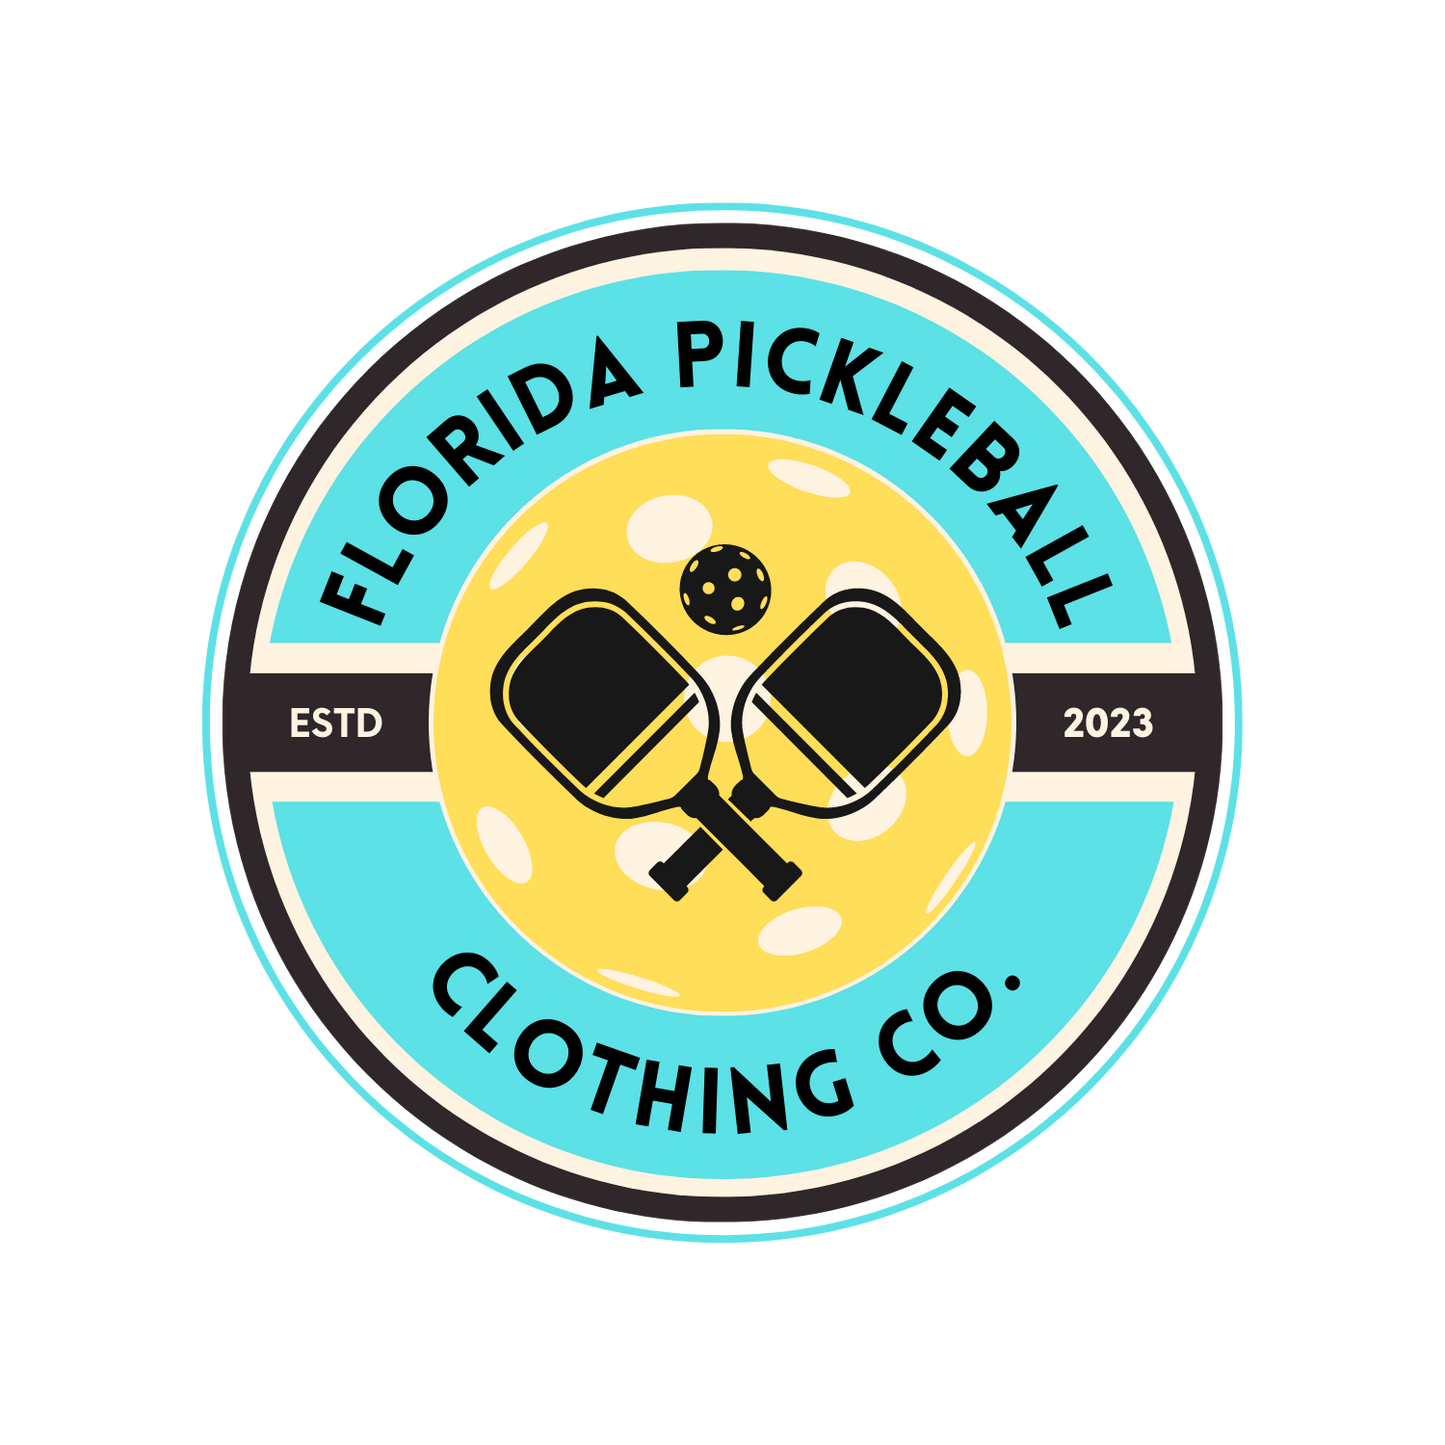 $25 Florida Pickleball Clothing Co. Gift Card